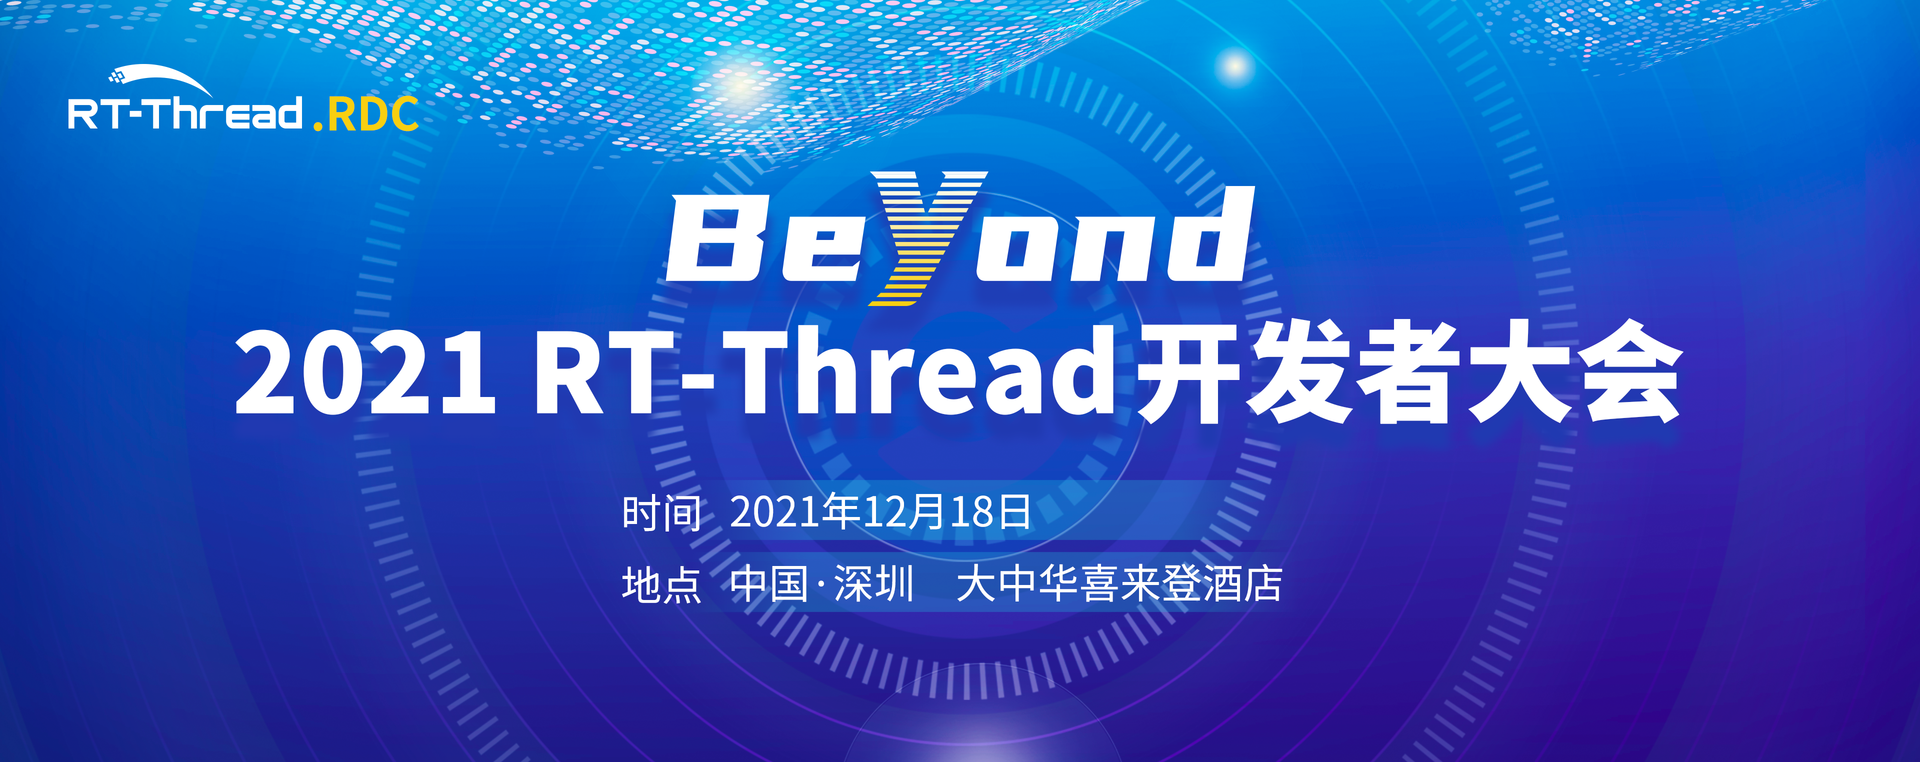 Beyond·2021 RT-Thread 开发者大会RDC